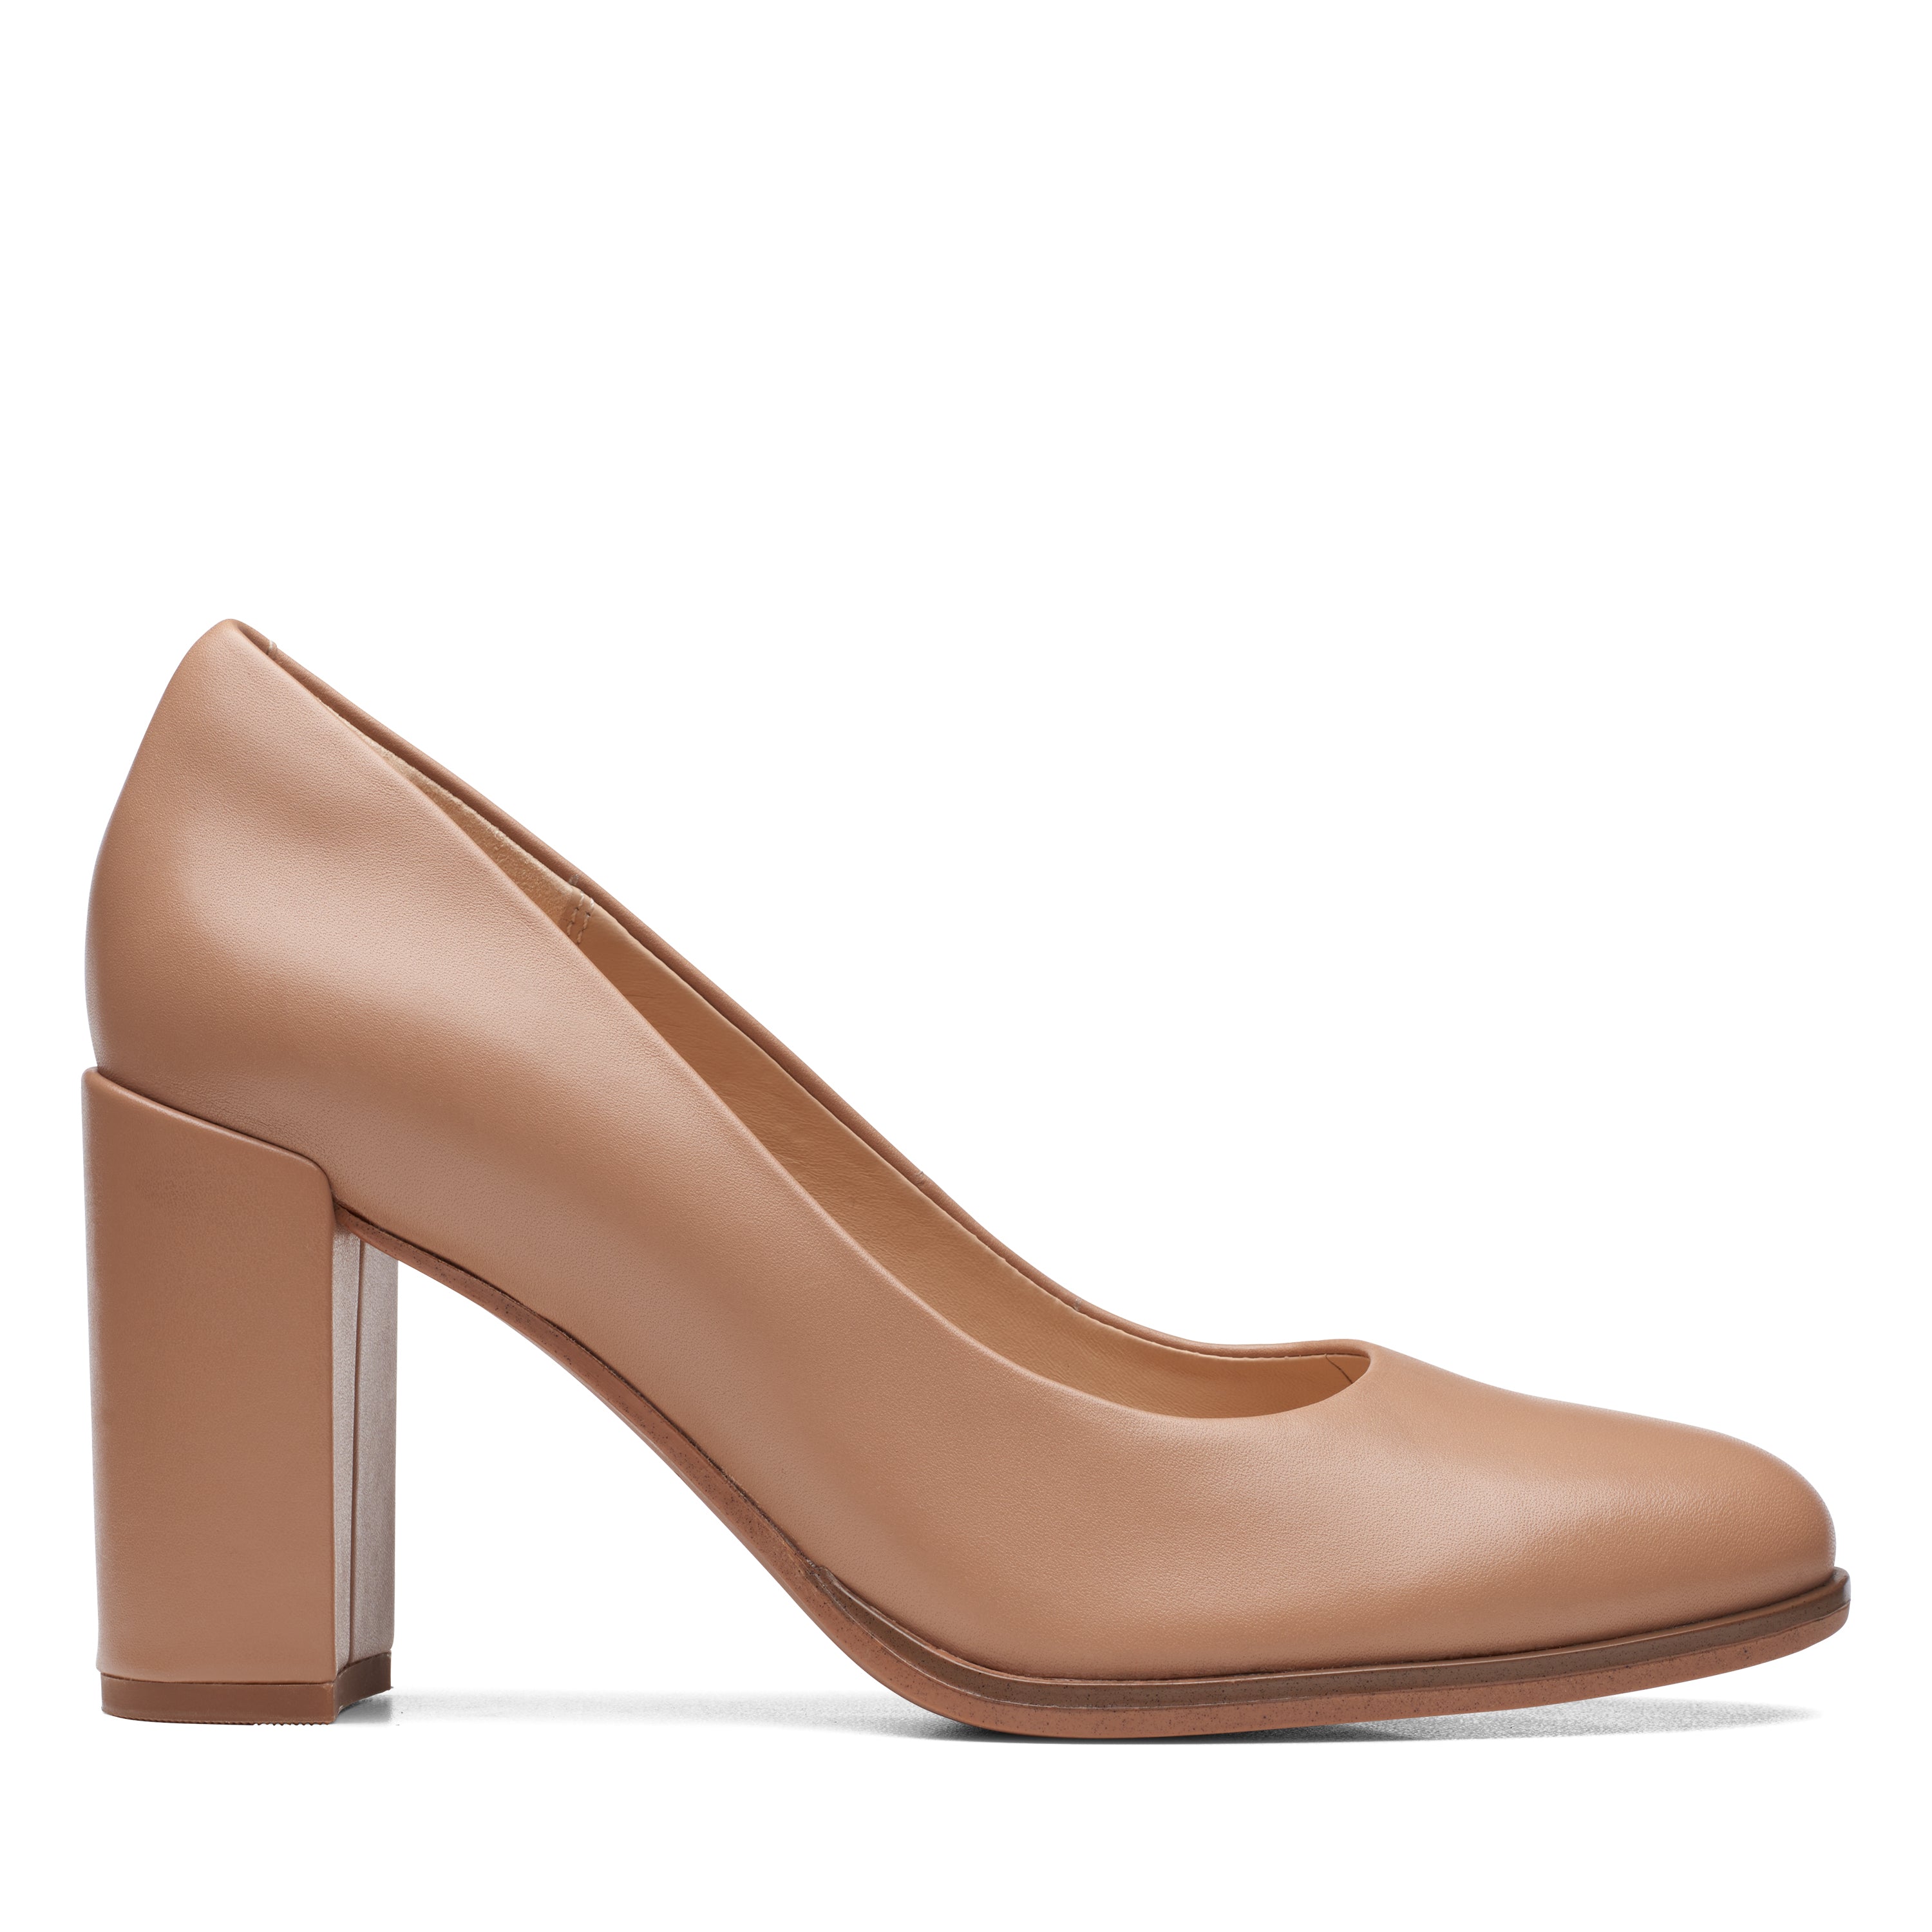 Buy Tan Heeled Sandals for Women by CLARKS Online | Ajio.com